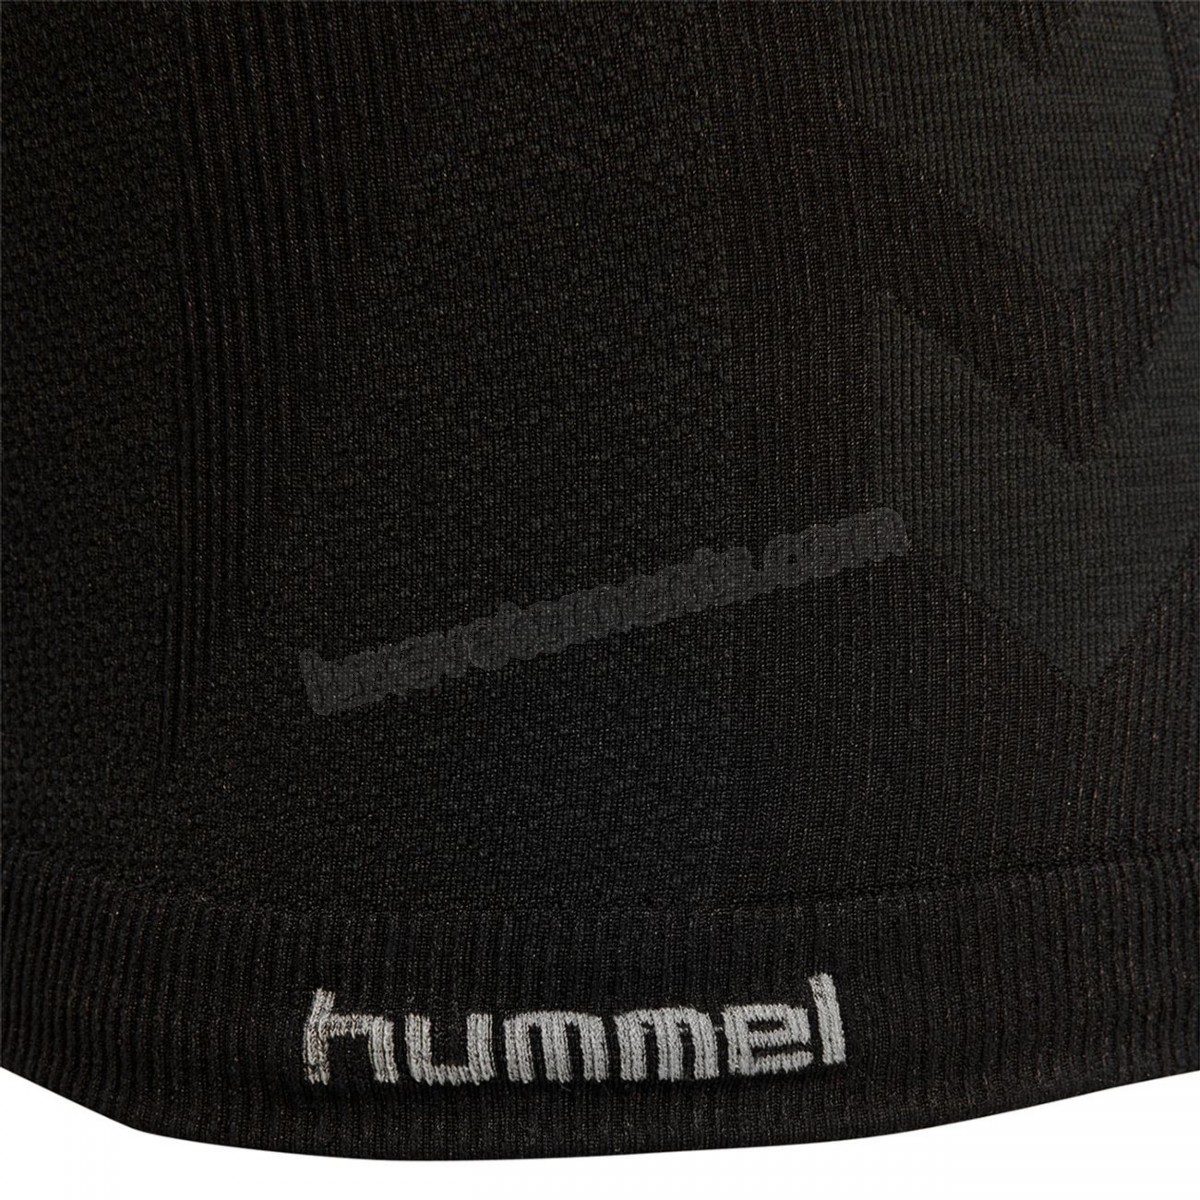 Hummel-Mode- Lifestyle femme HUMMEL T-shirt femme Hummel clea seamless top Vente en ligne - -7